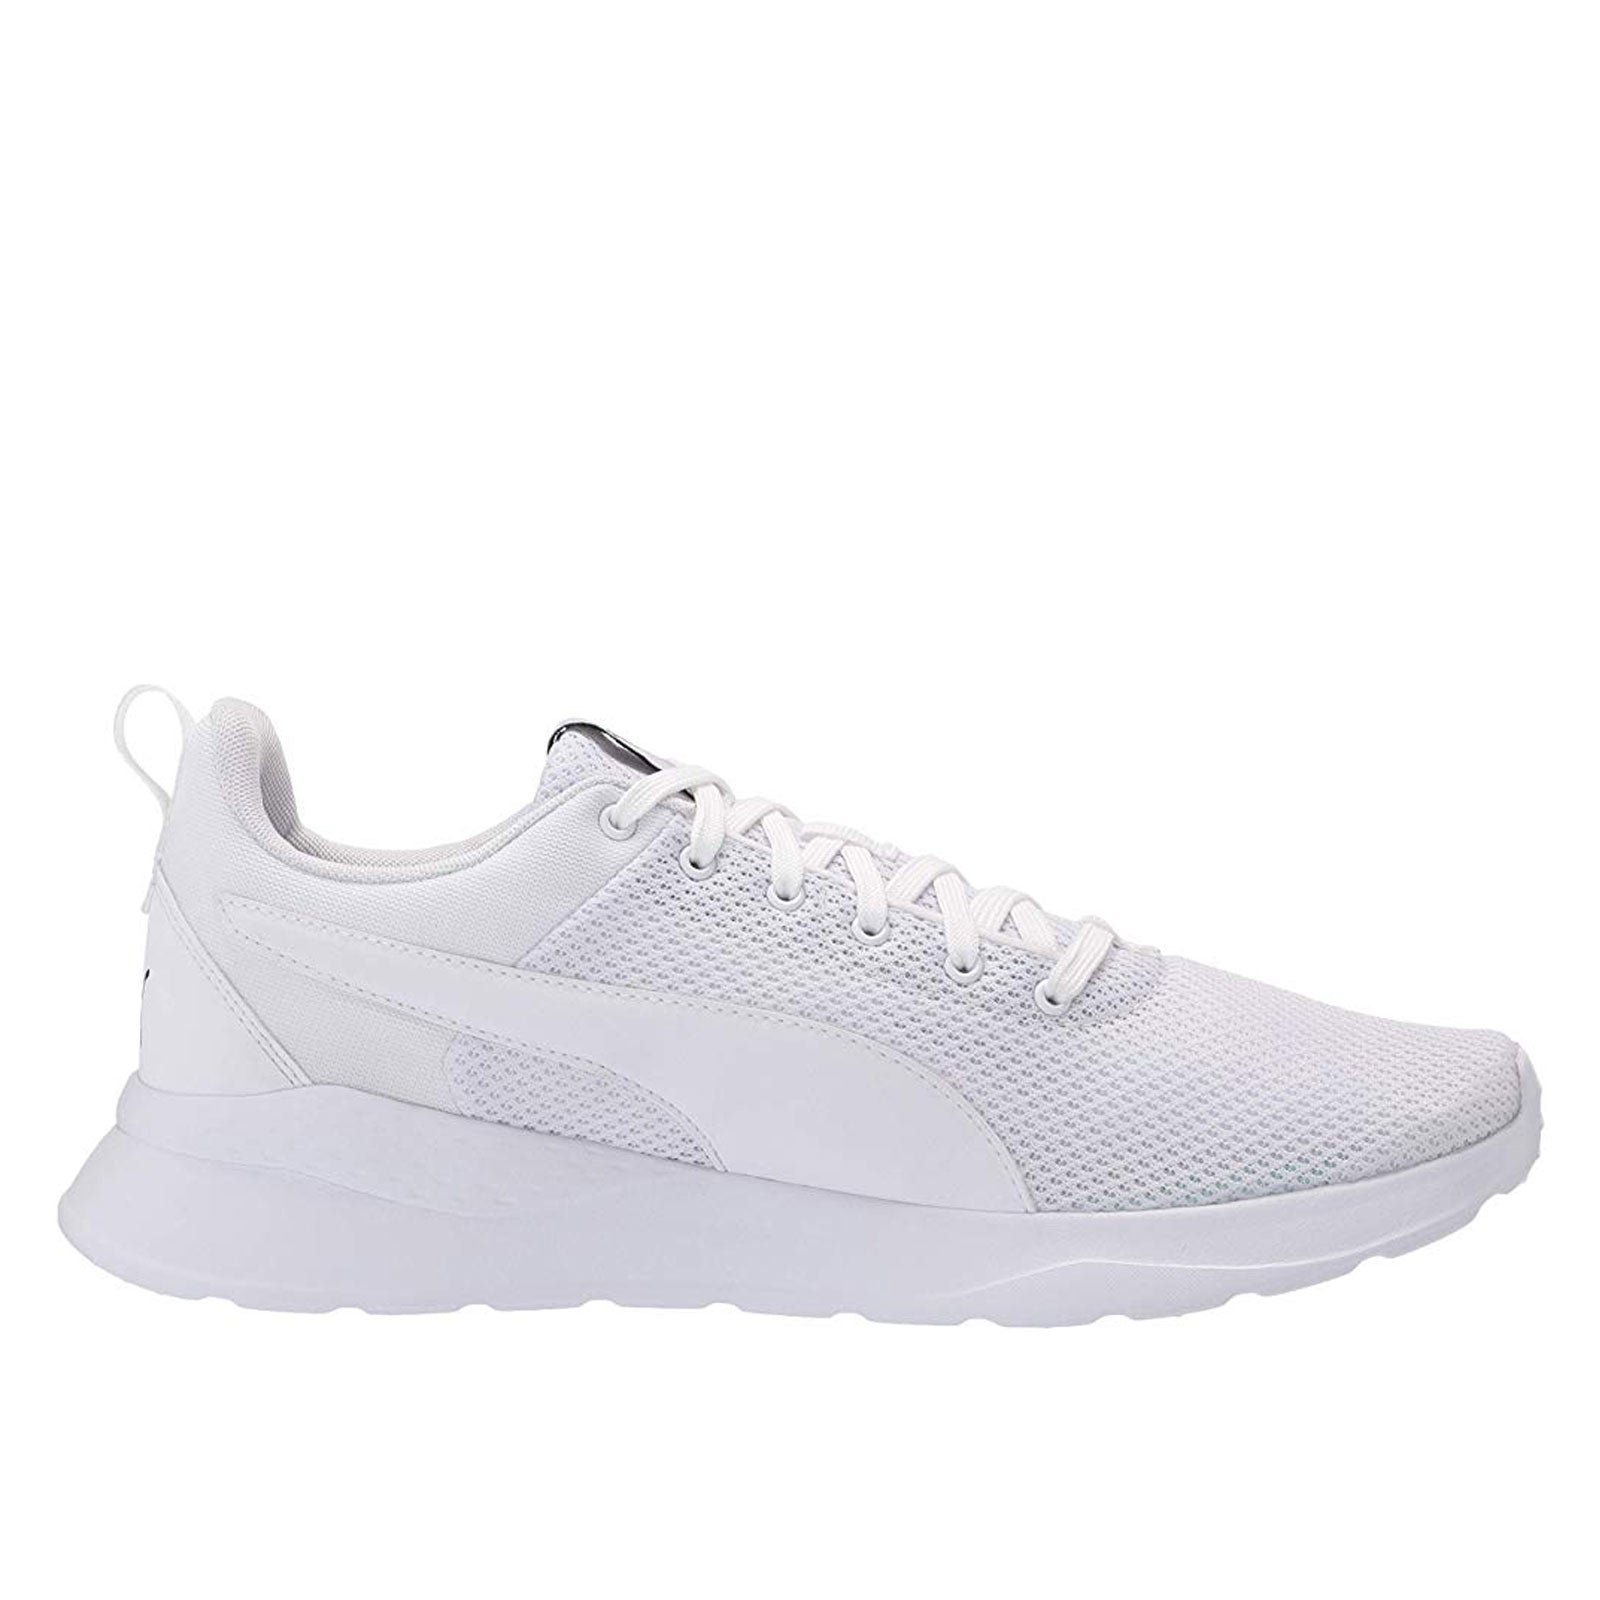 White) 37112803 – Anzarun Lite Milano Puma White-Puma Shoes (Puma